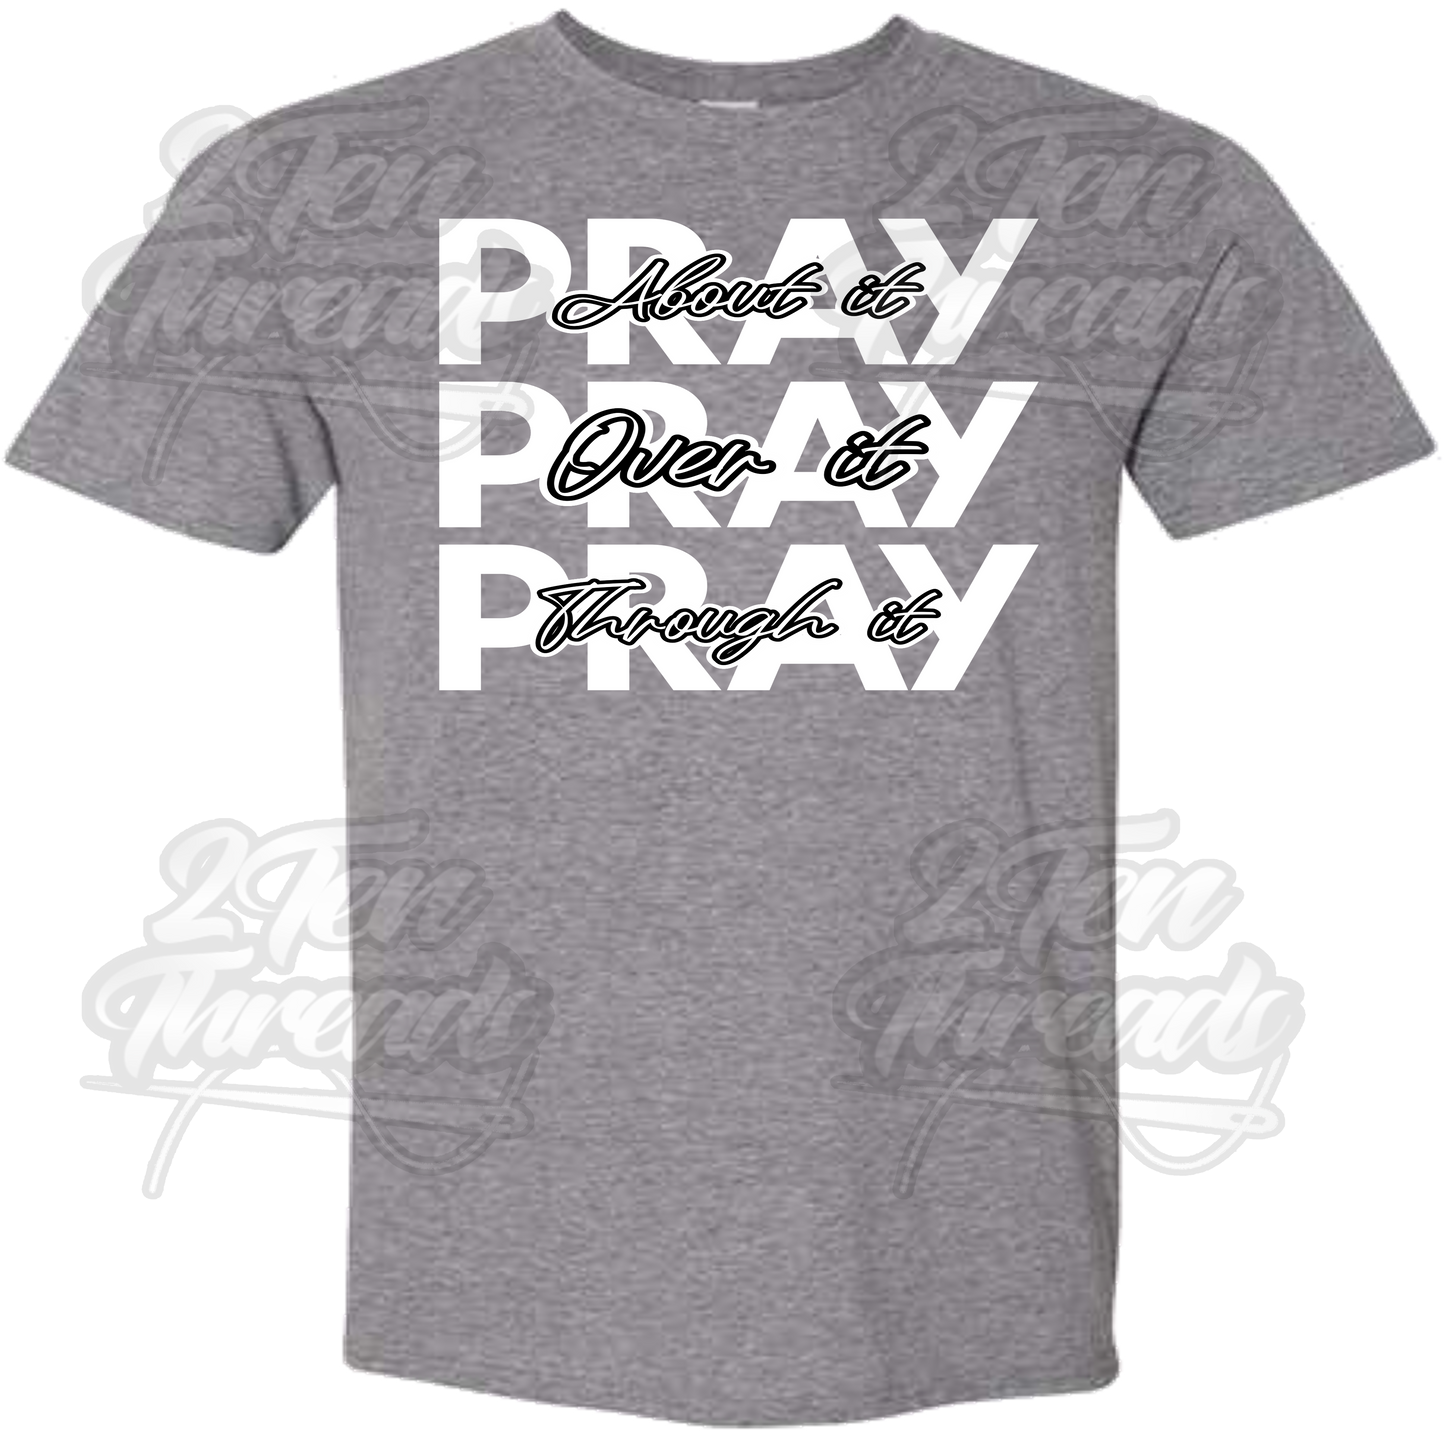 Pray x 3 Shirt